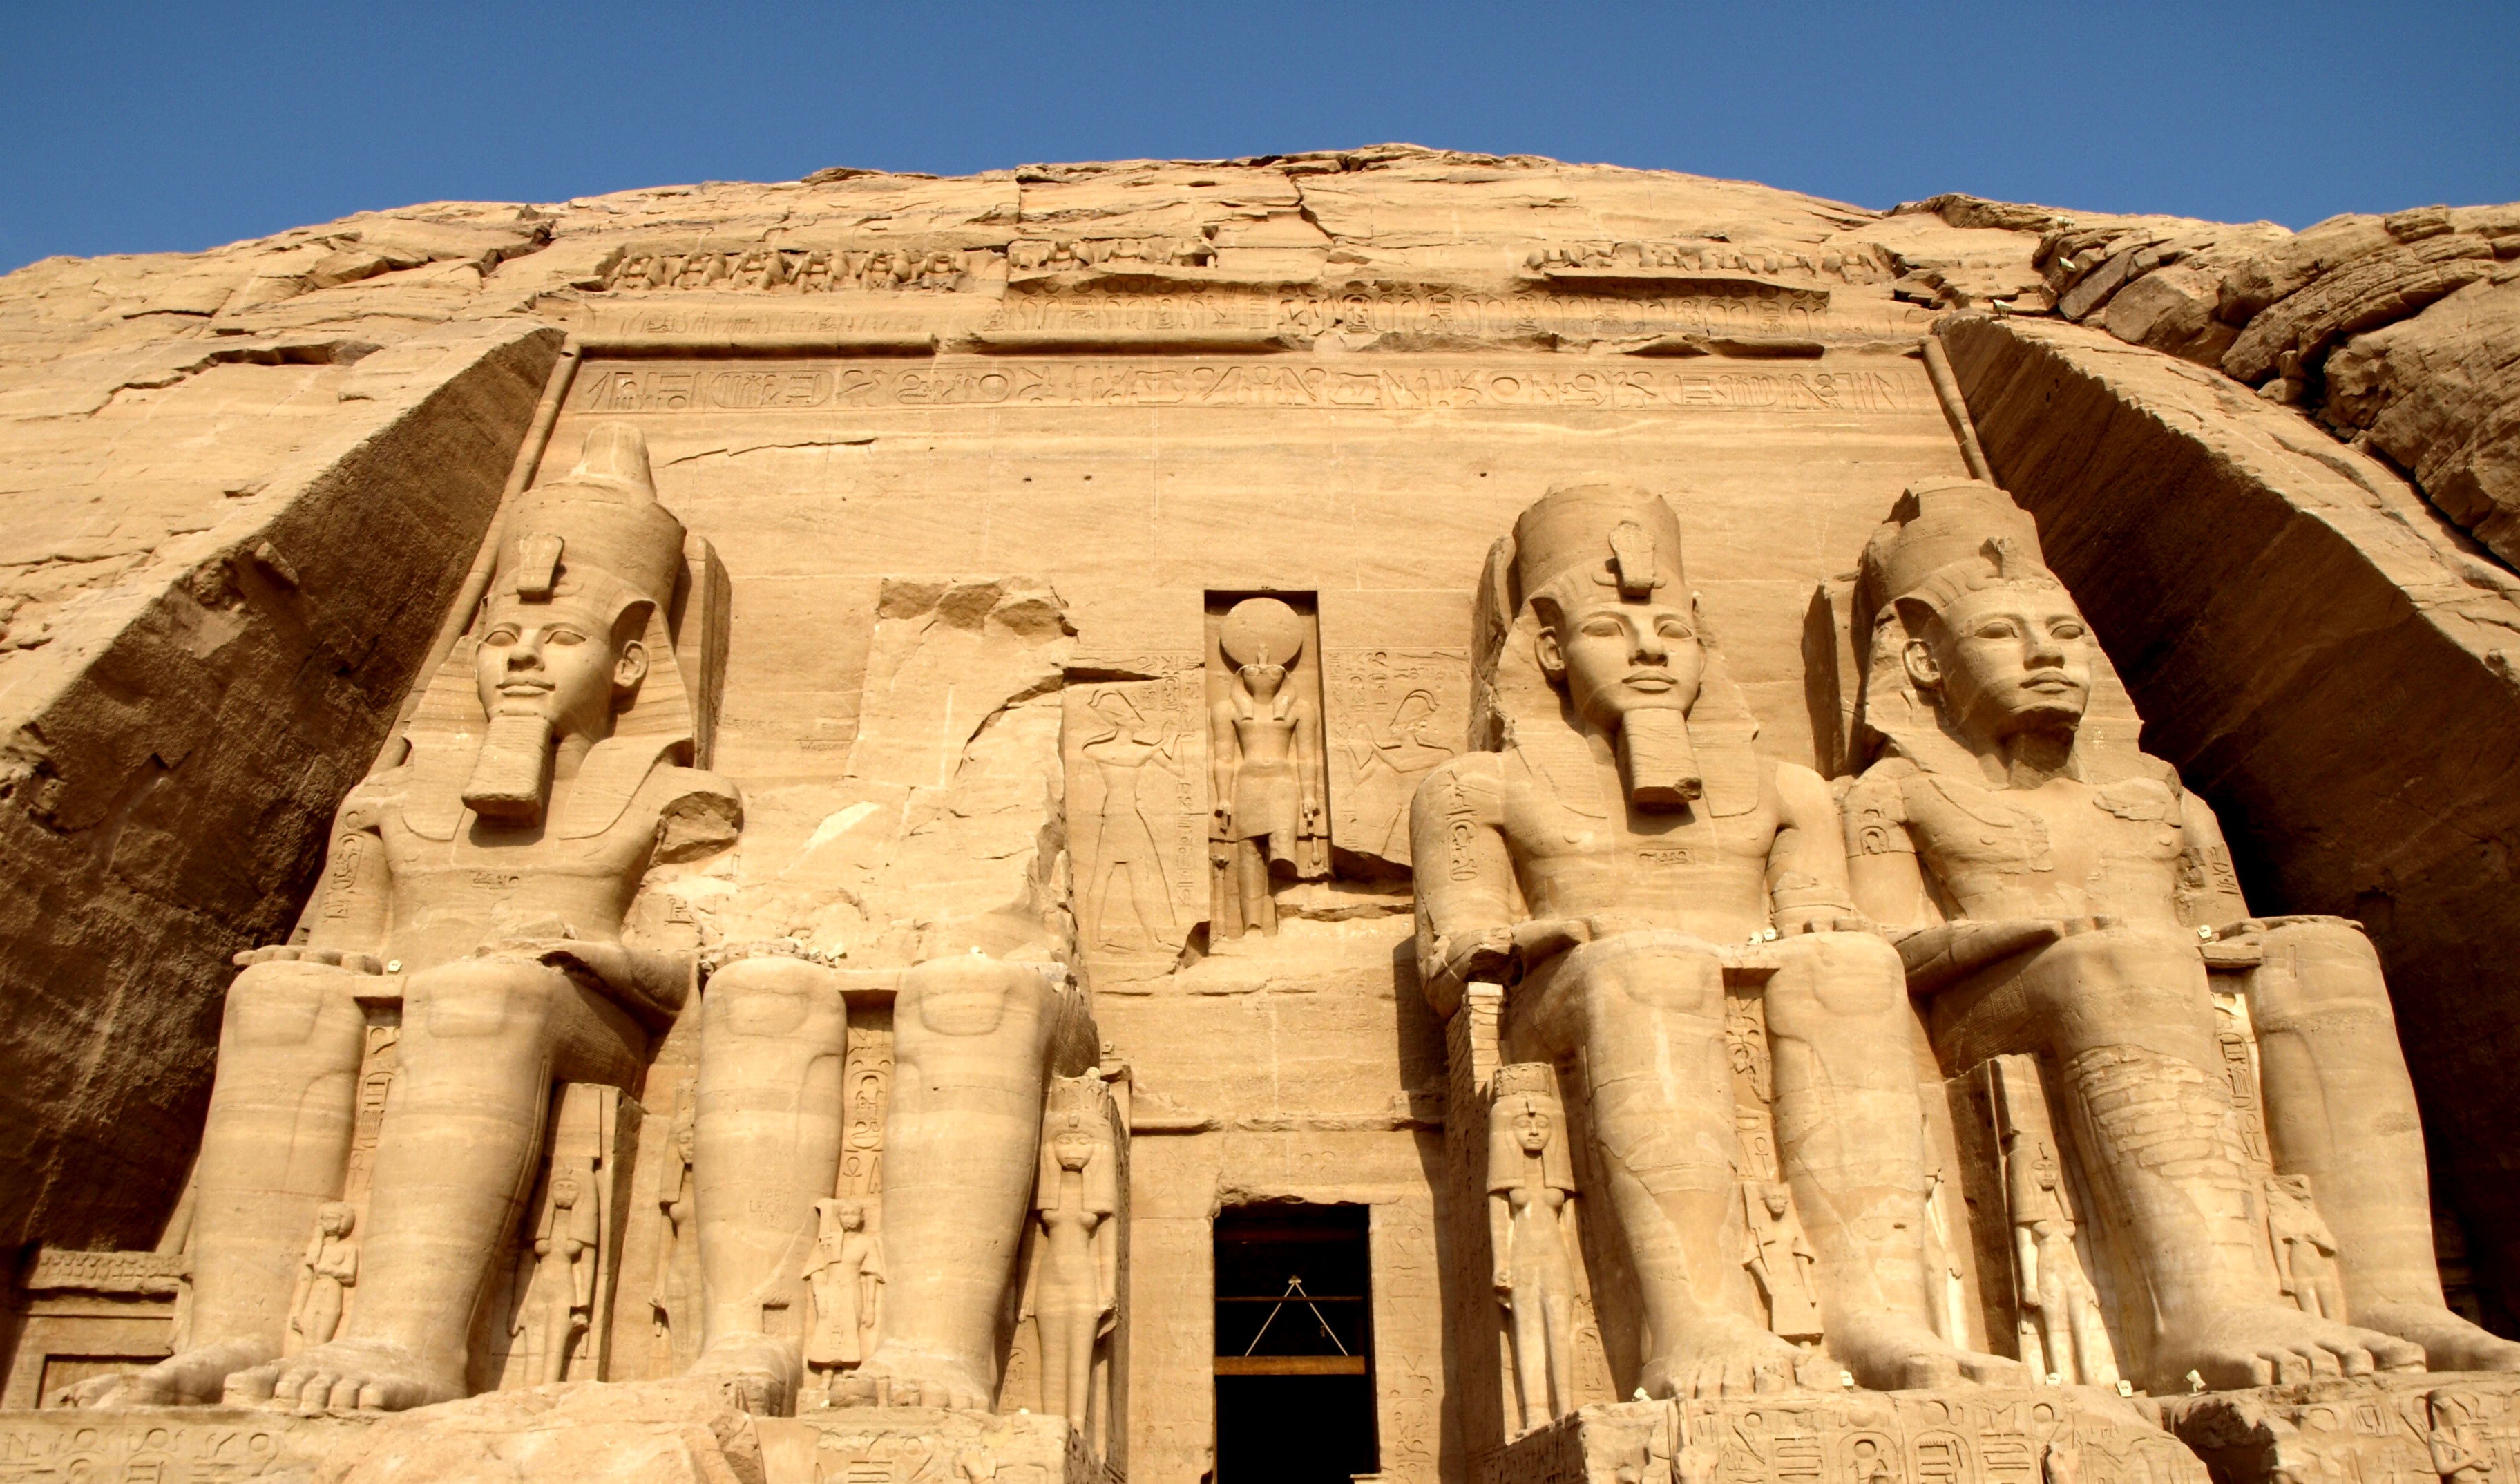 High Resolution Wallpaper | Abu Simbel Temples 3648x2148 px